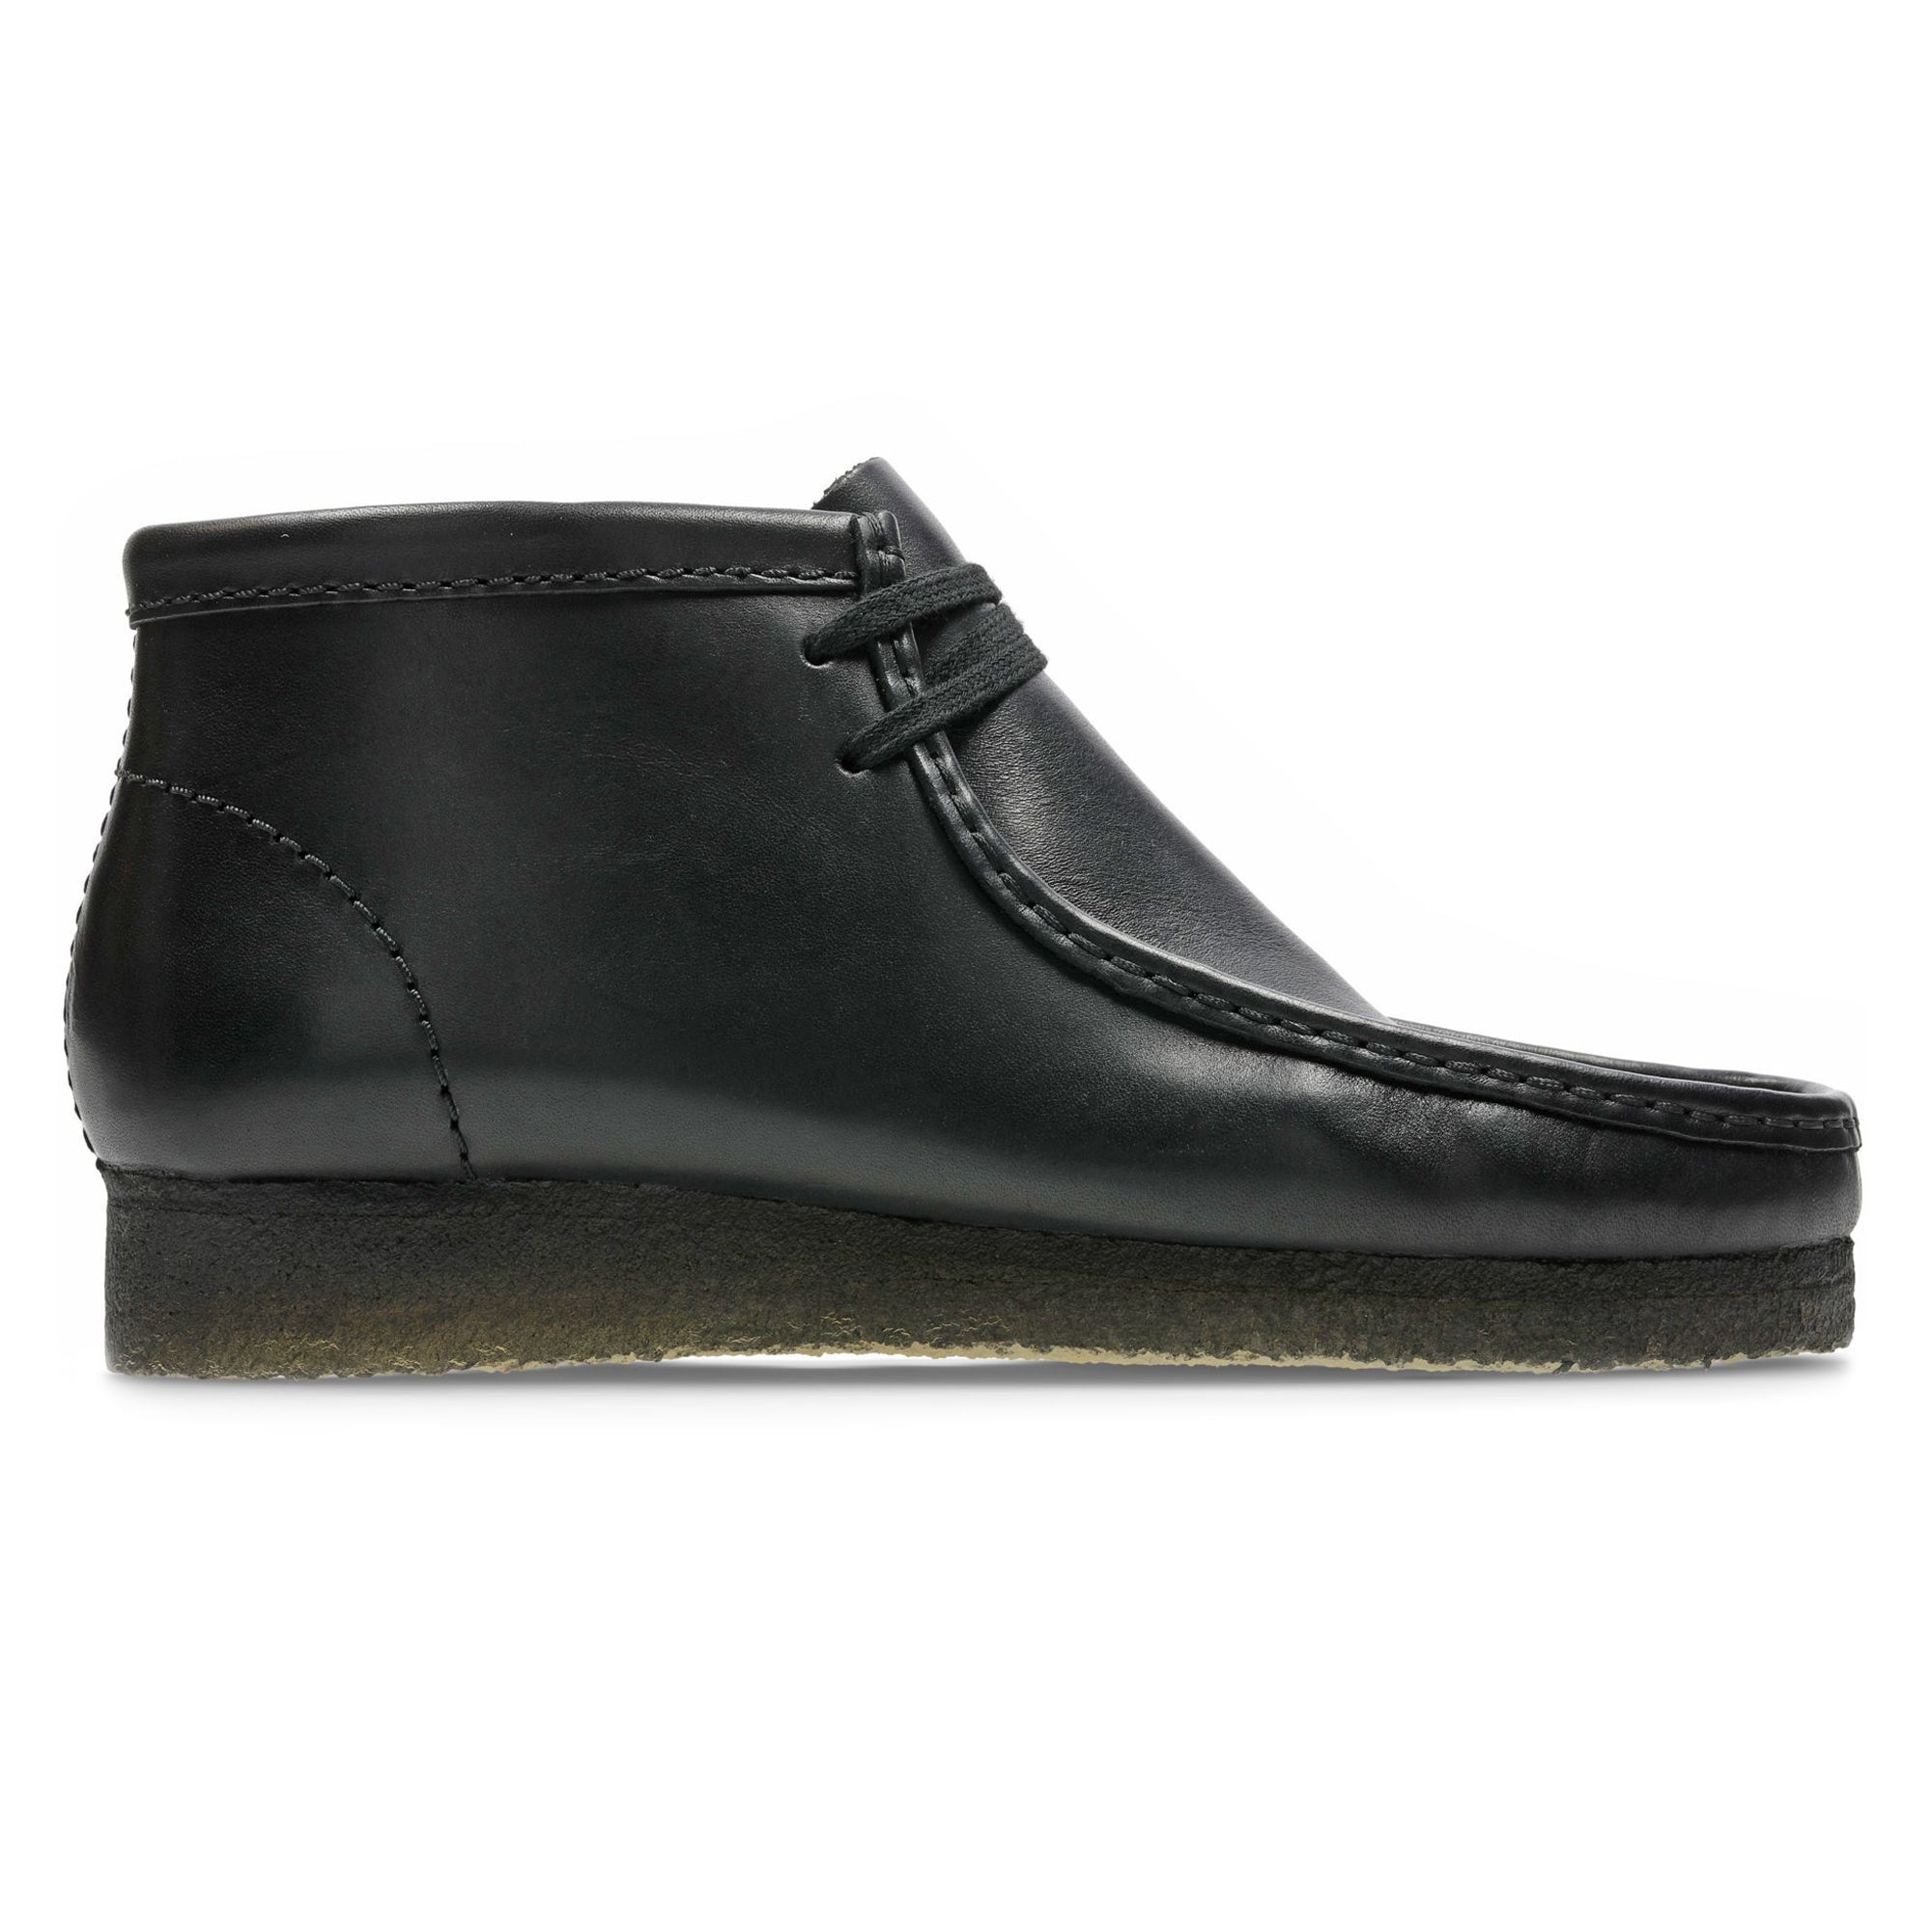 Clarks Originals Wallabee Boot - Black Leather